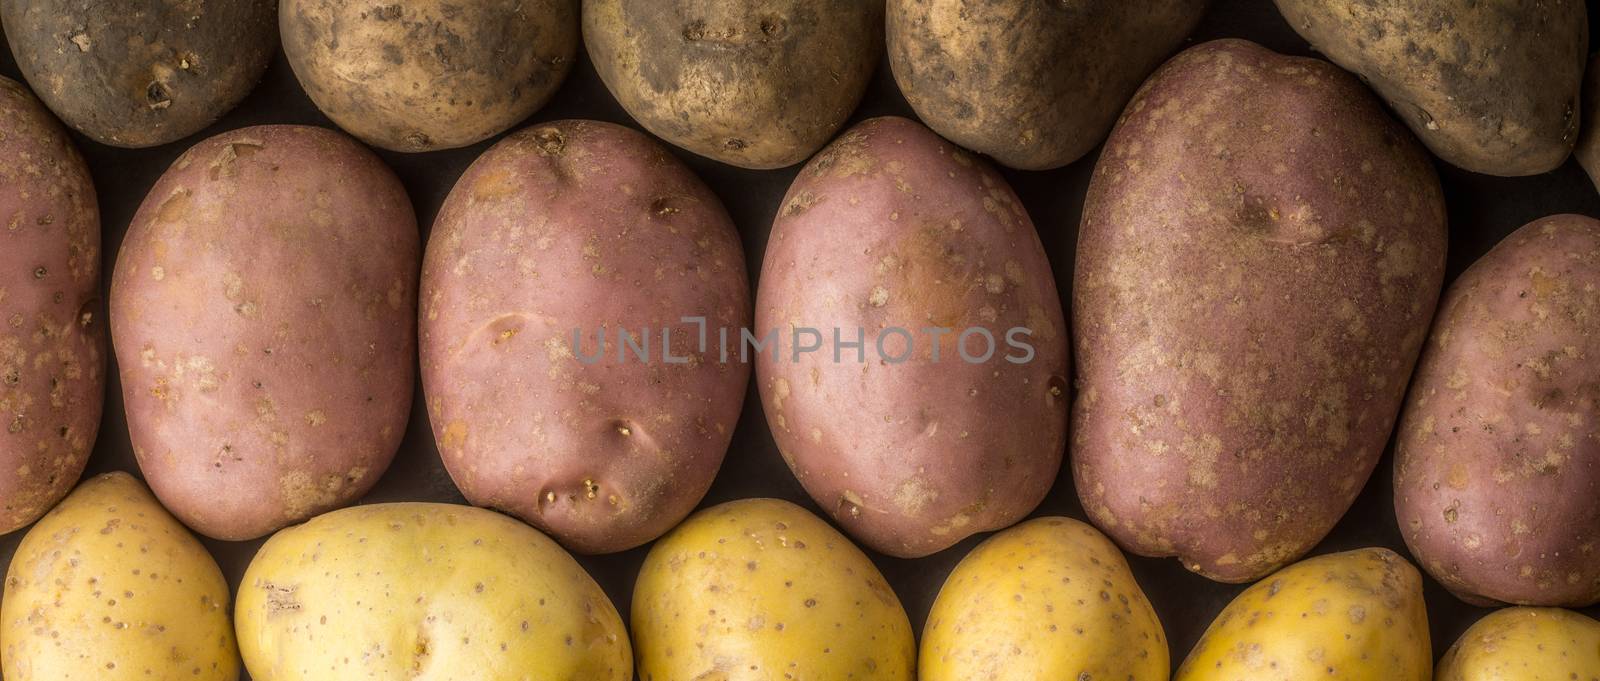 Raw potatoes mix background wide screen by Deniskarpenkov